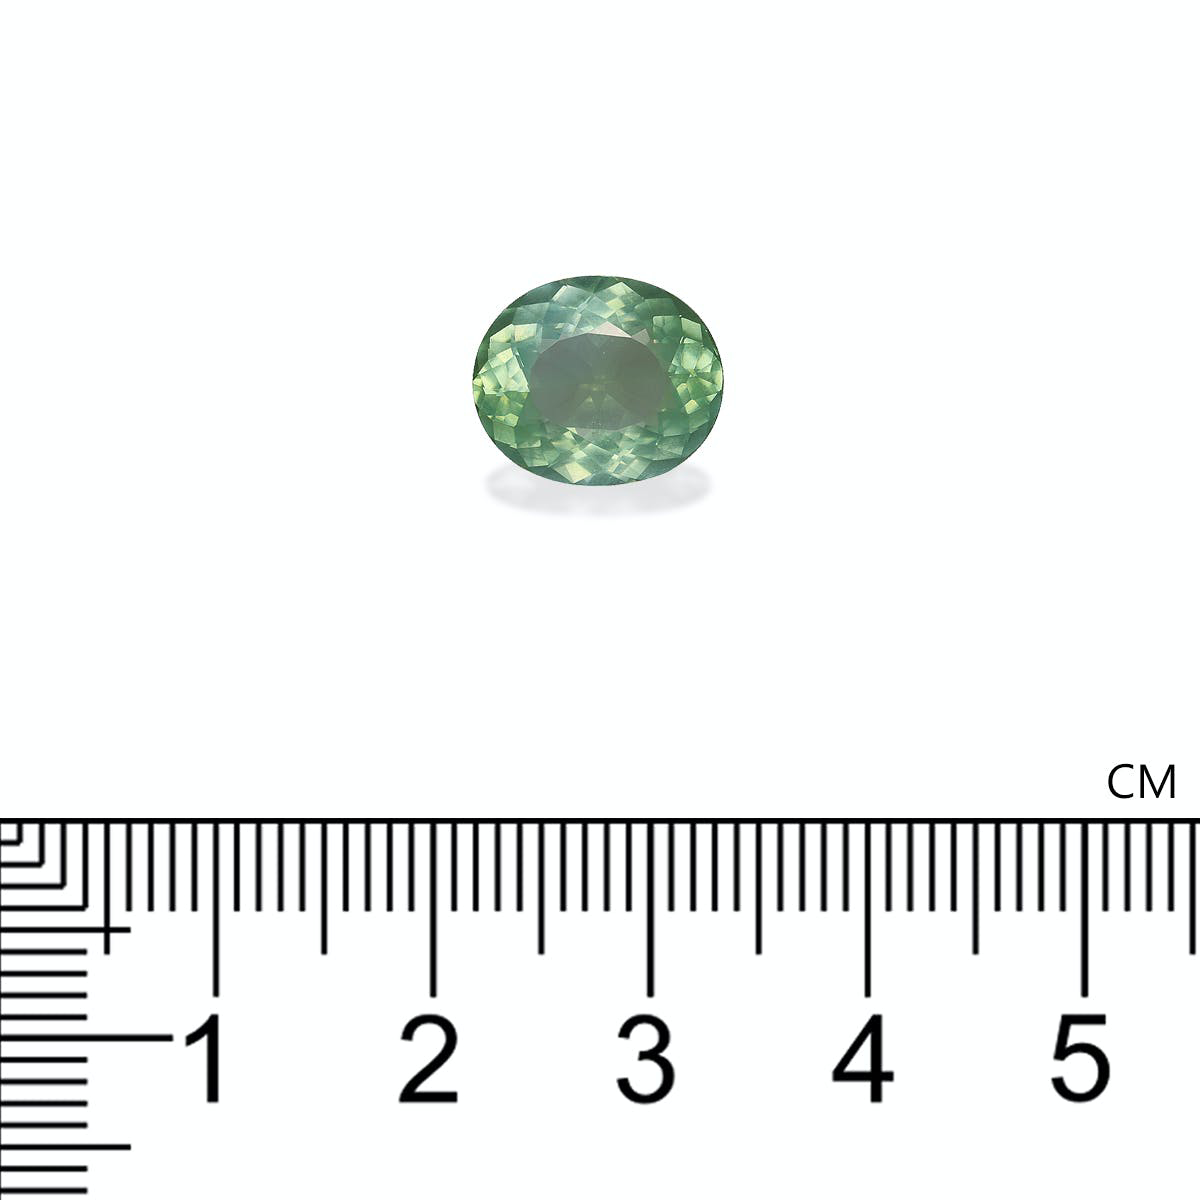 Picture of Seafoam Green Paraiba Tourmaline 3.87ct - 11x9mm (PA0706)